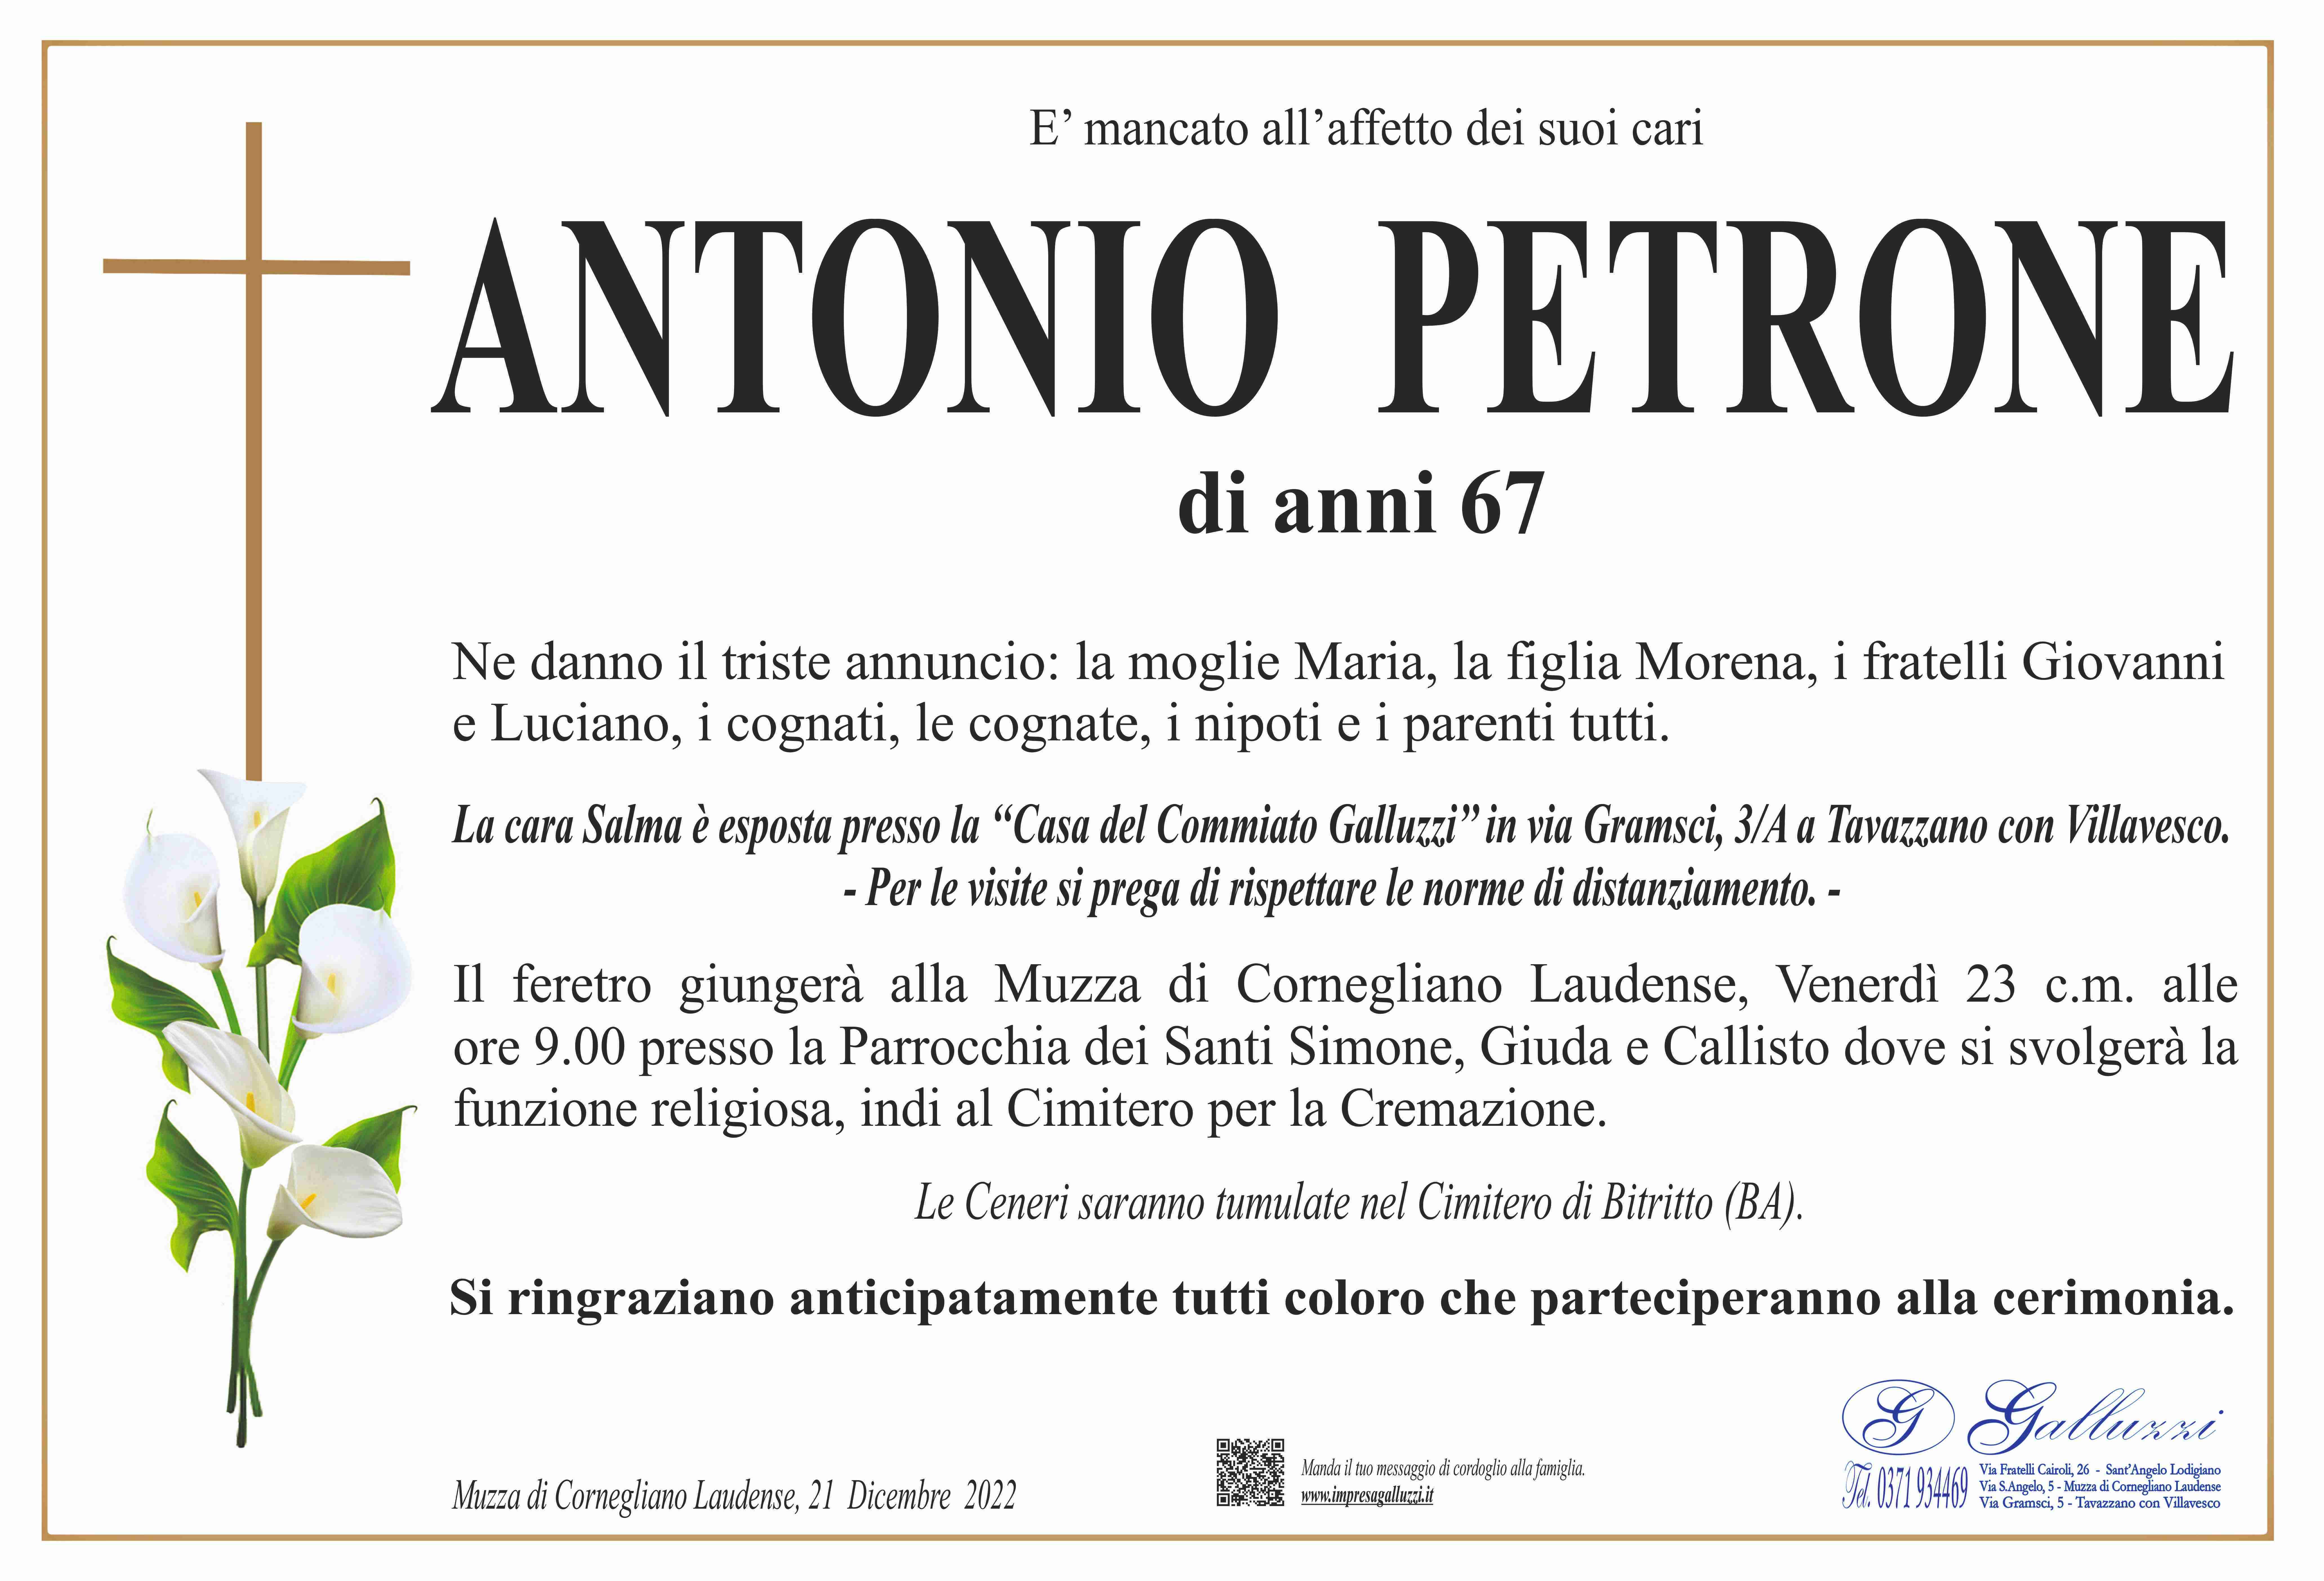 Antonio Petrone